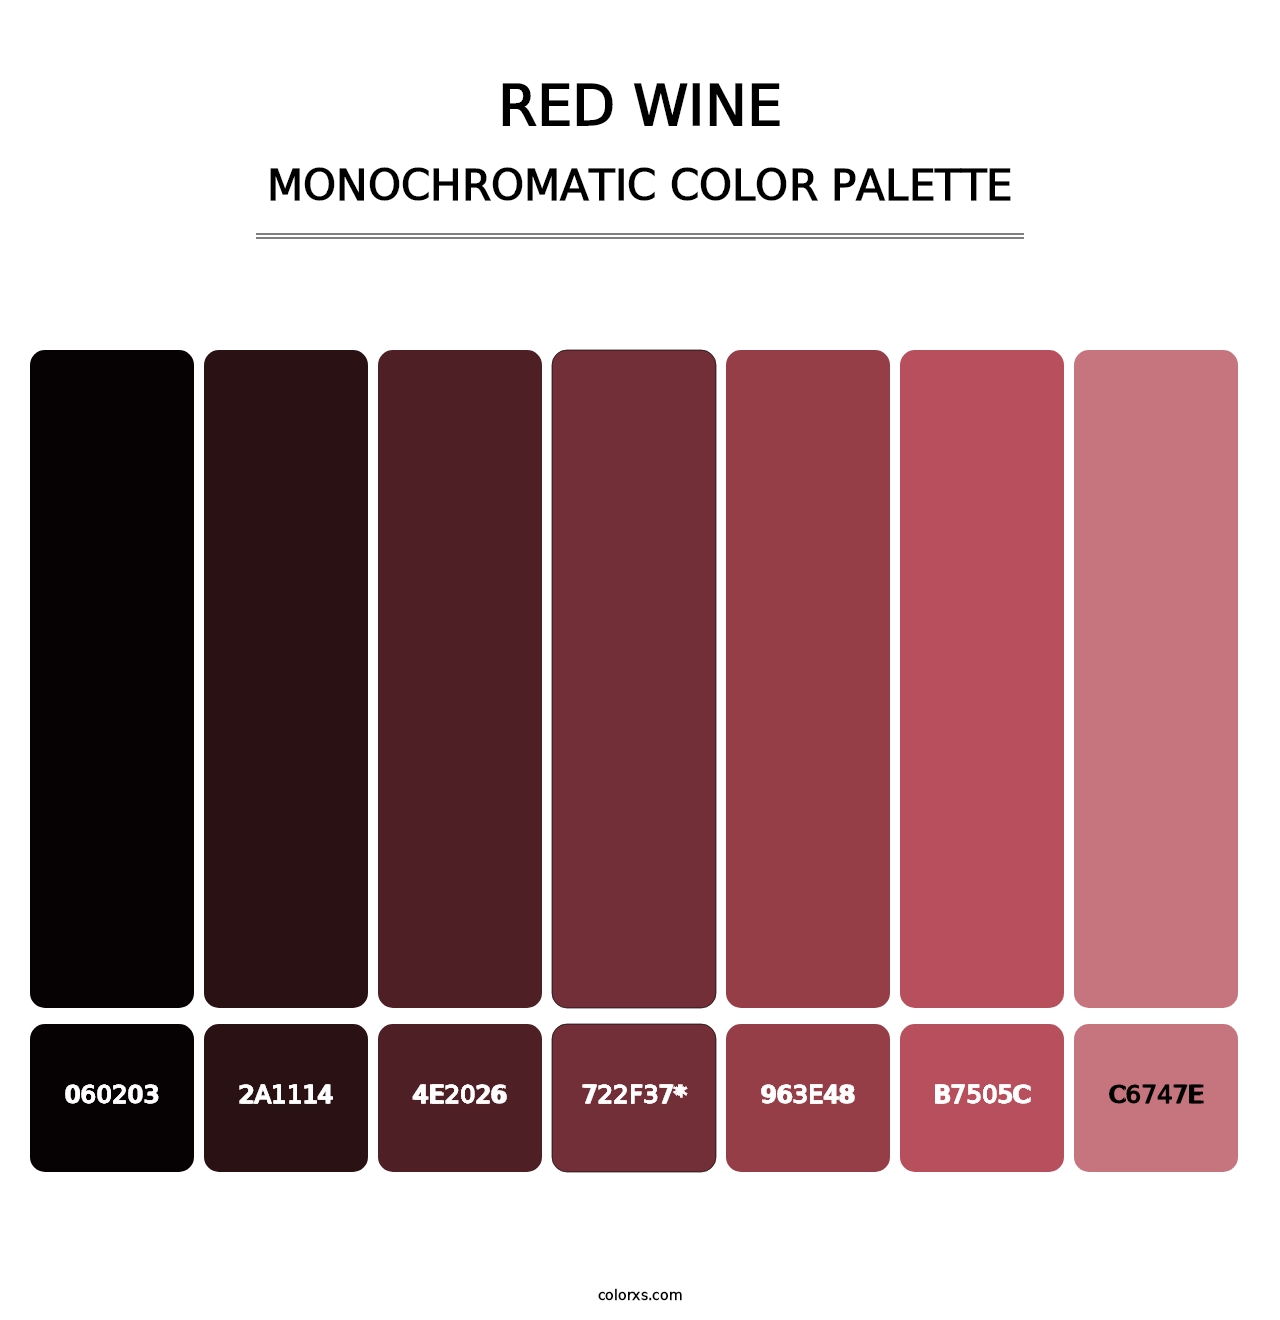 Red Wine - Monochromatic Color Palette